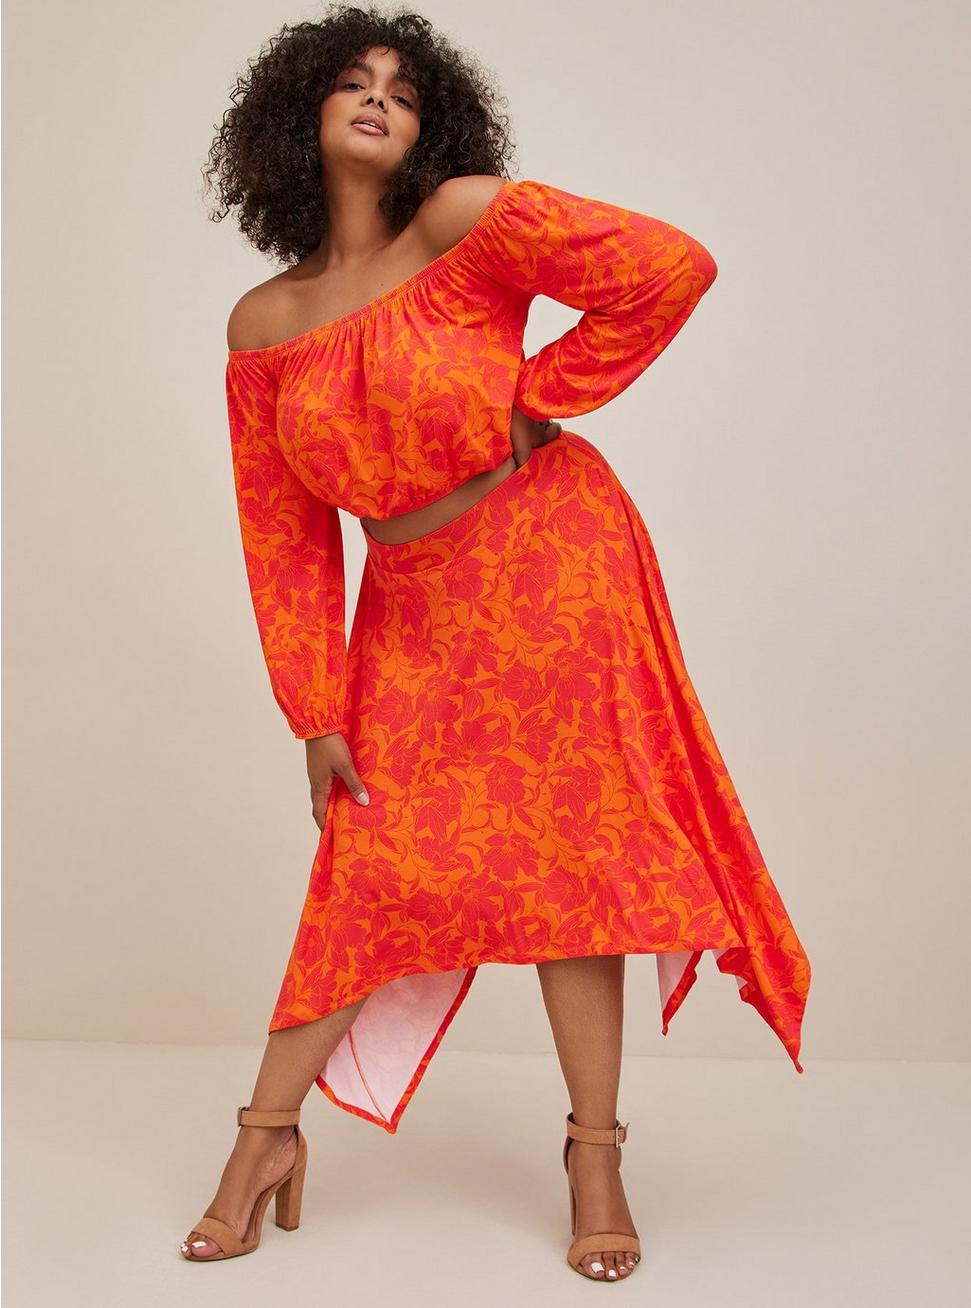 Handkerchief Hem Maxi Skirt - Super Soft Floral Orange, FLORAL ORANGE, alternate